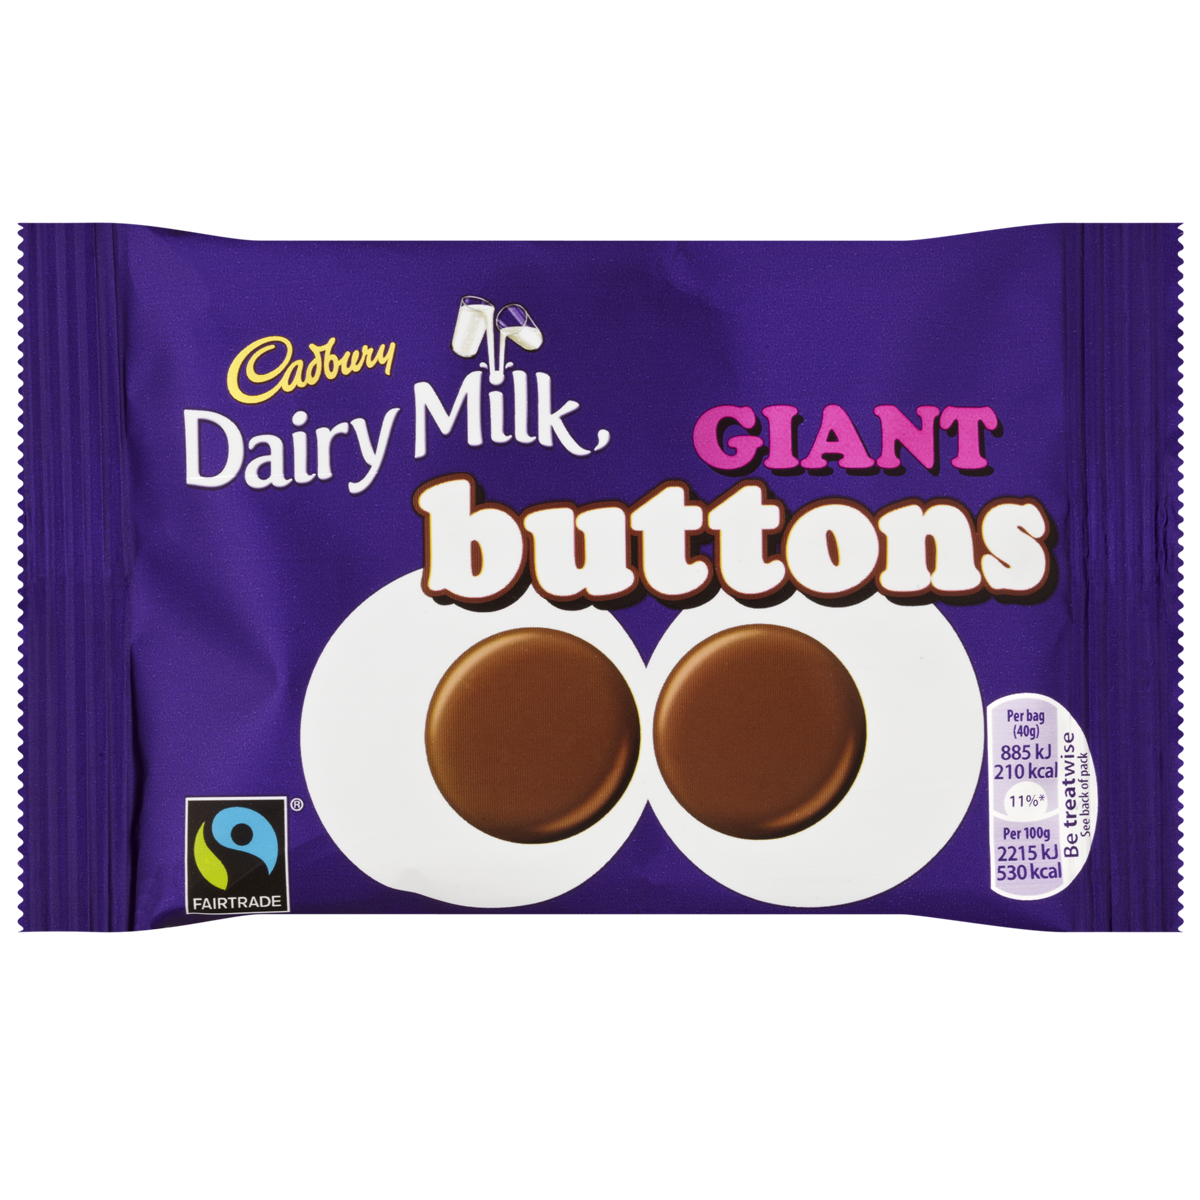 Cadbury Giant Buttons Bag 40g